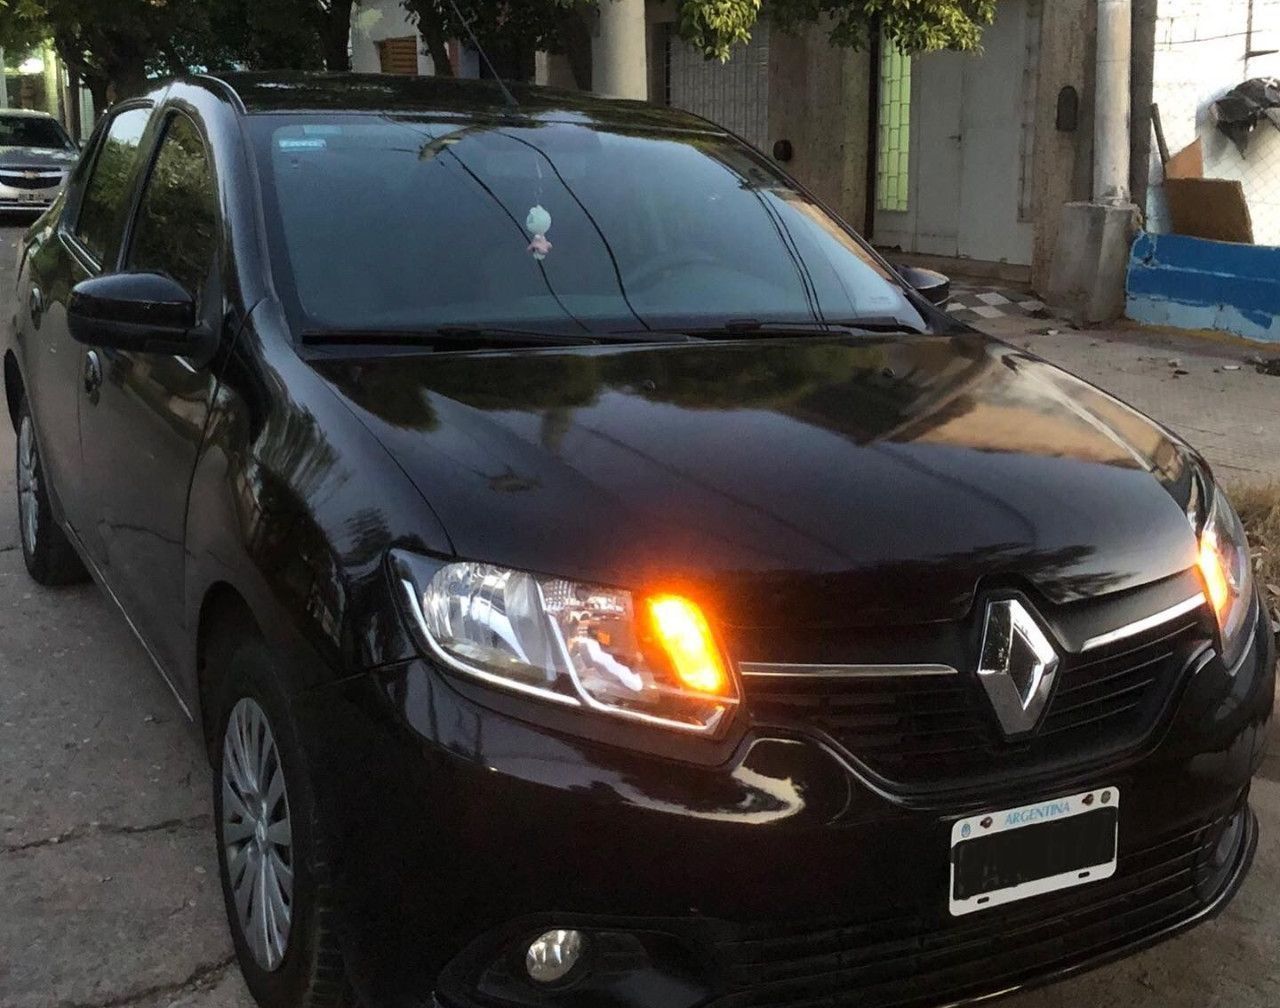 Renault Logan Usado en Córdoba, deRuedas